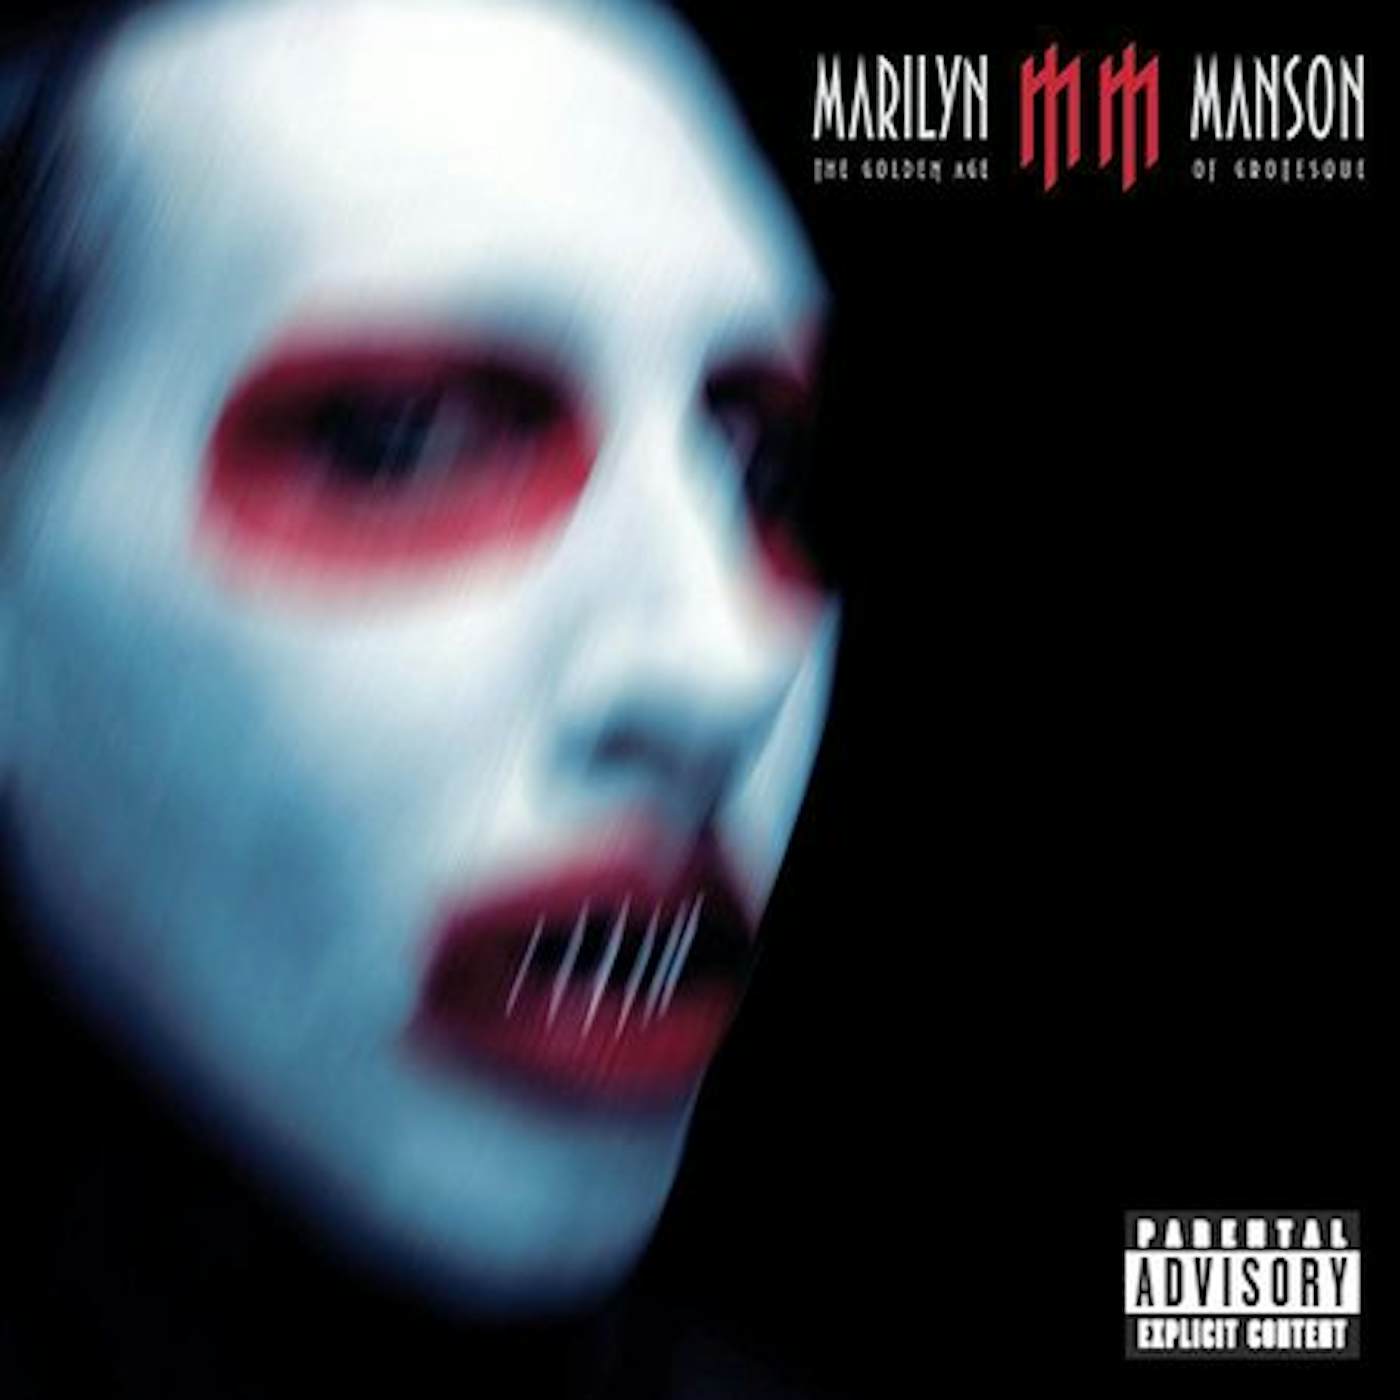 Marilyn Manson GOLDEN AGE OF GROTESQUE CD